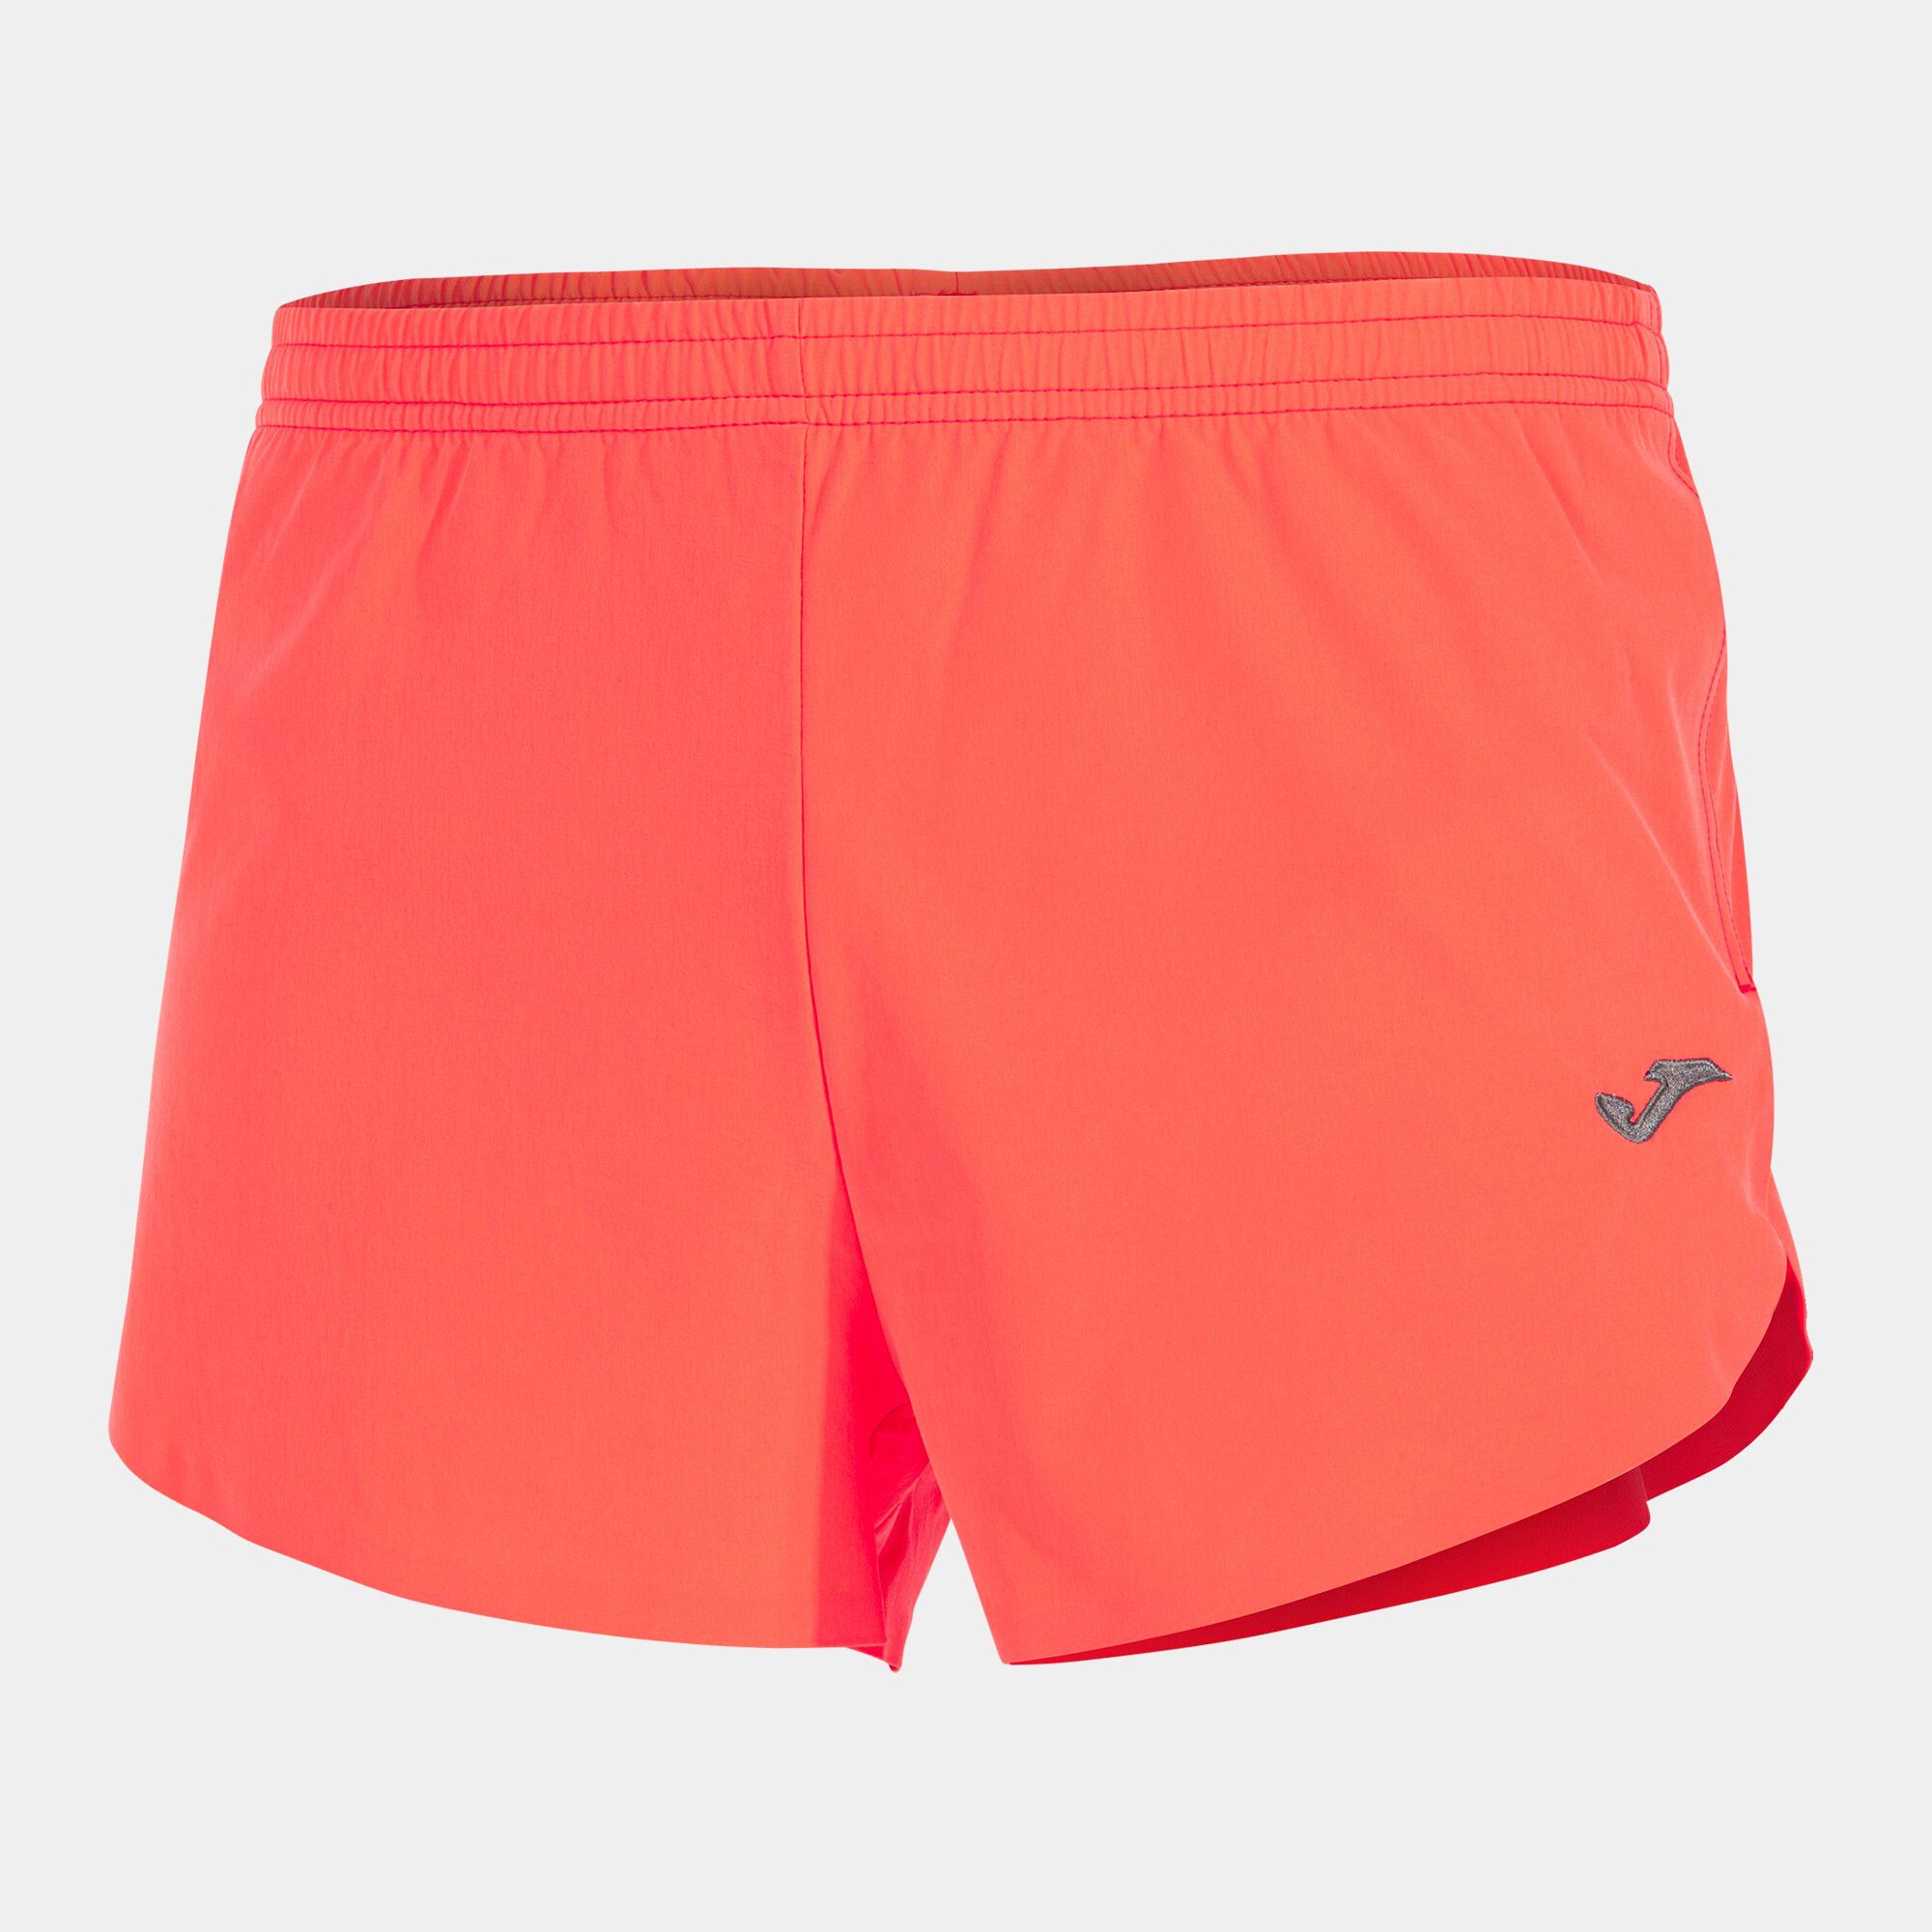 Shorts man Olimpia fluorescent coral